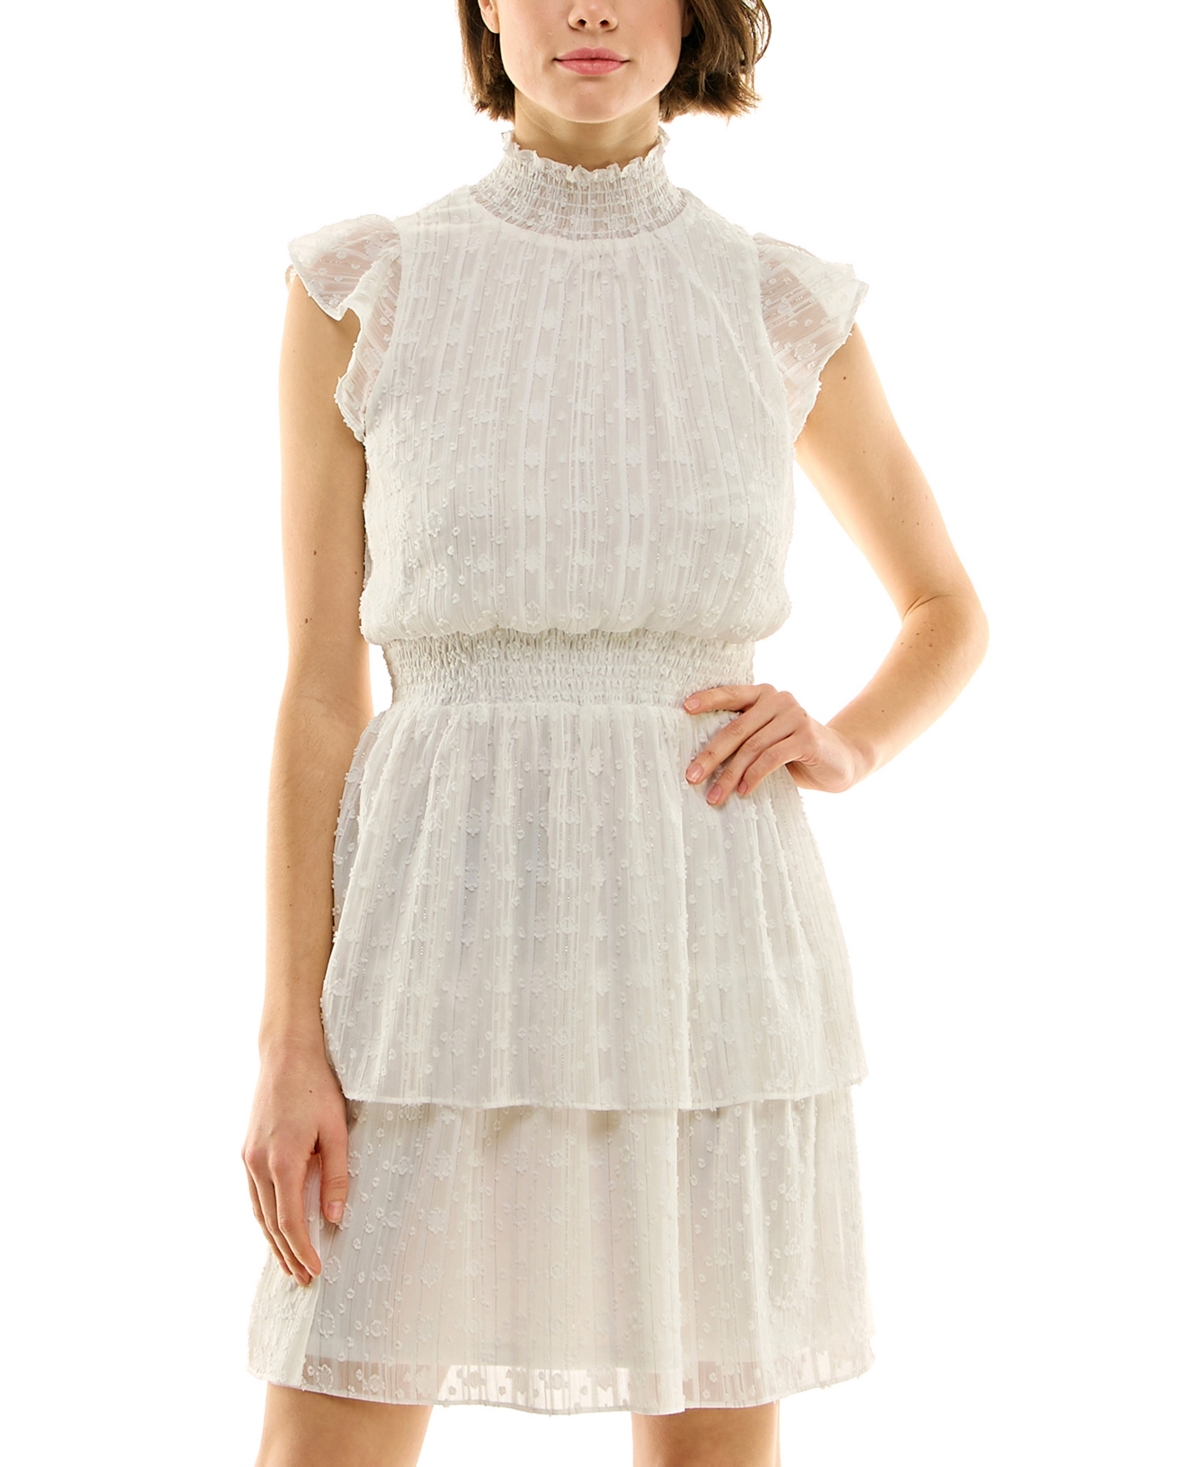 Bcx Juniors' Smocked Swiss-Dot Dress, Created for Macy's